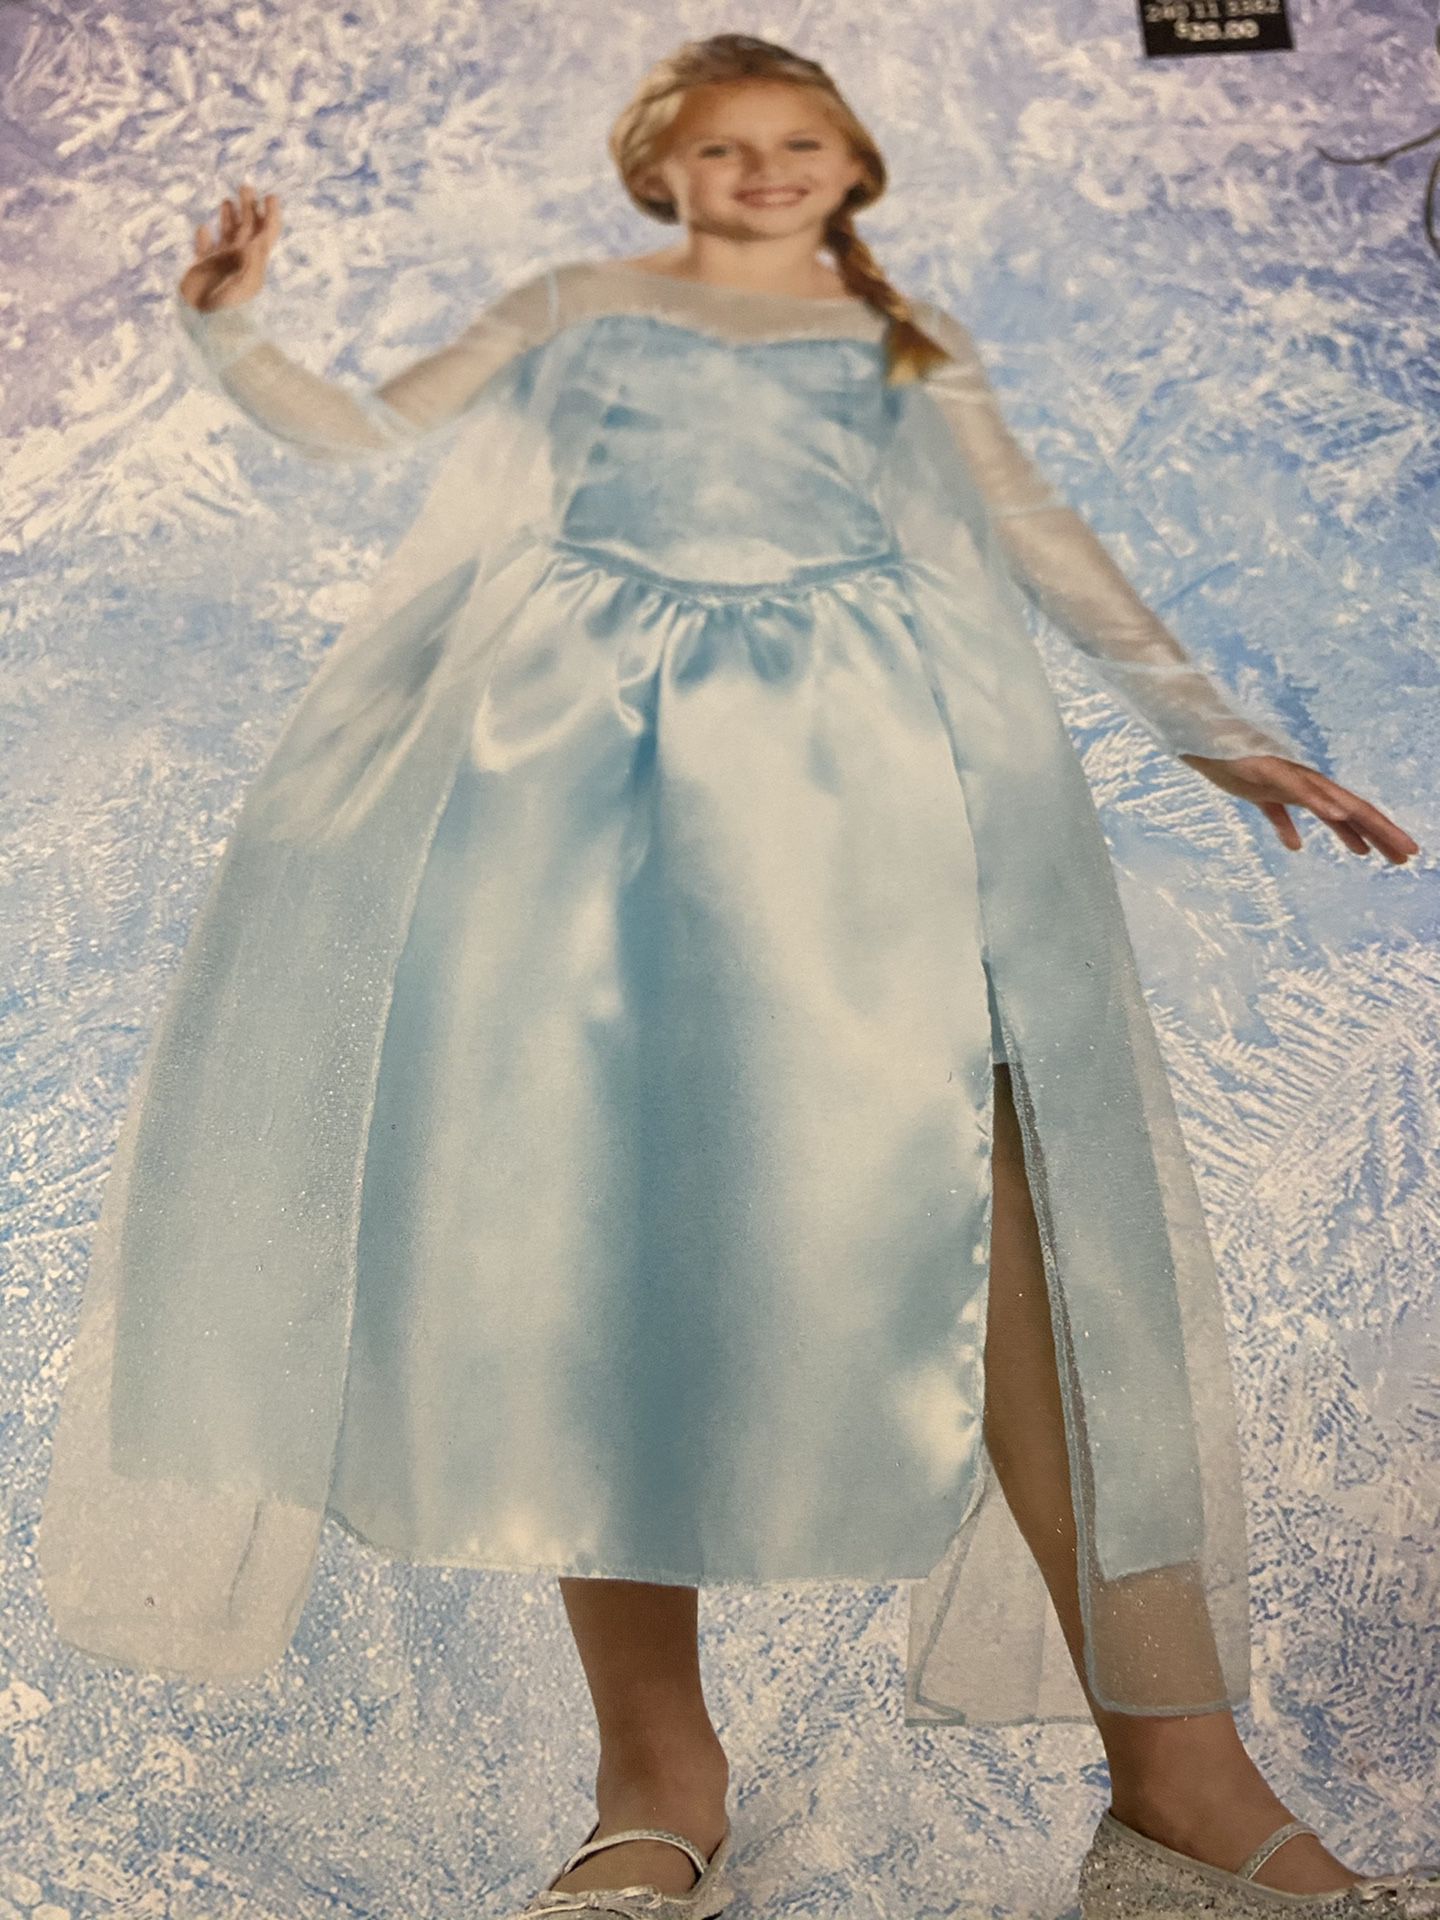 Frozen Princess Elsa dress Halloween costume size med 7-8 new